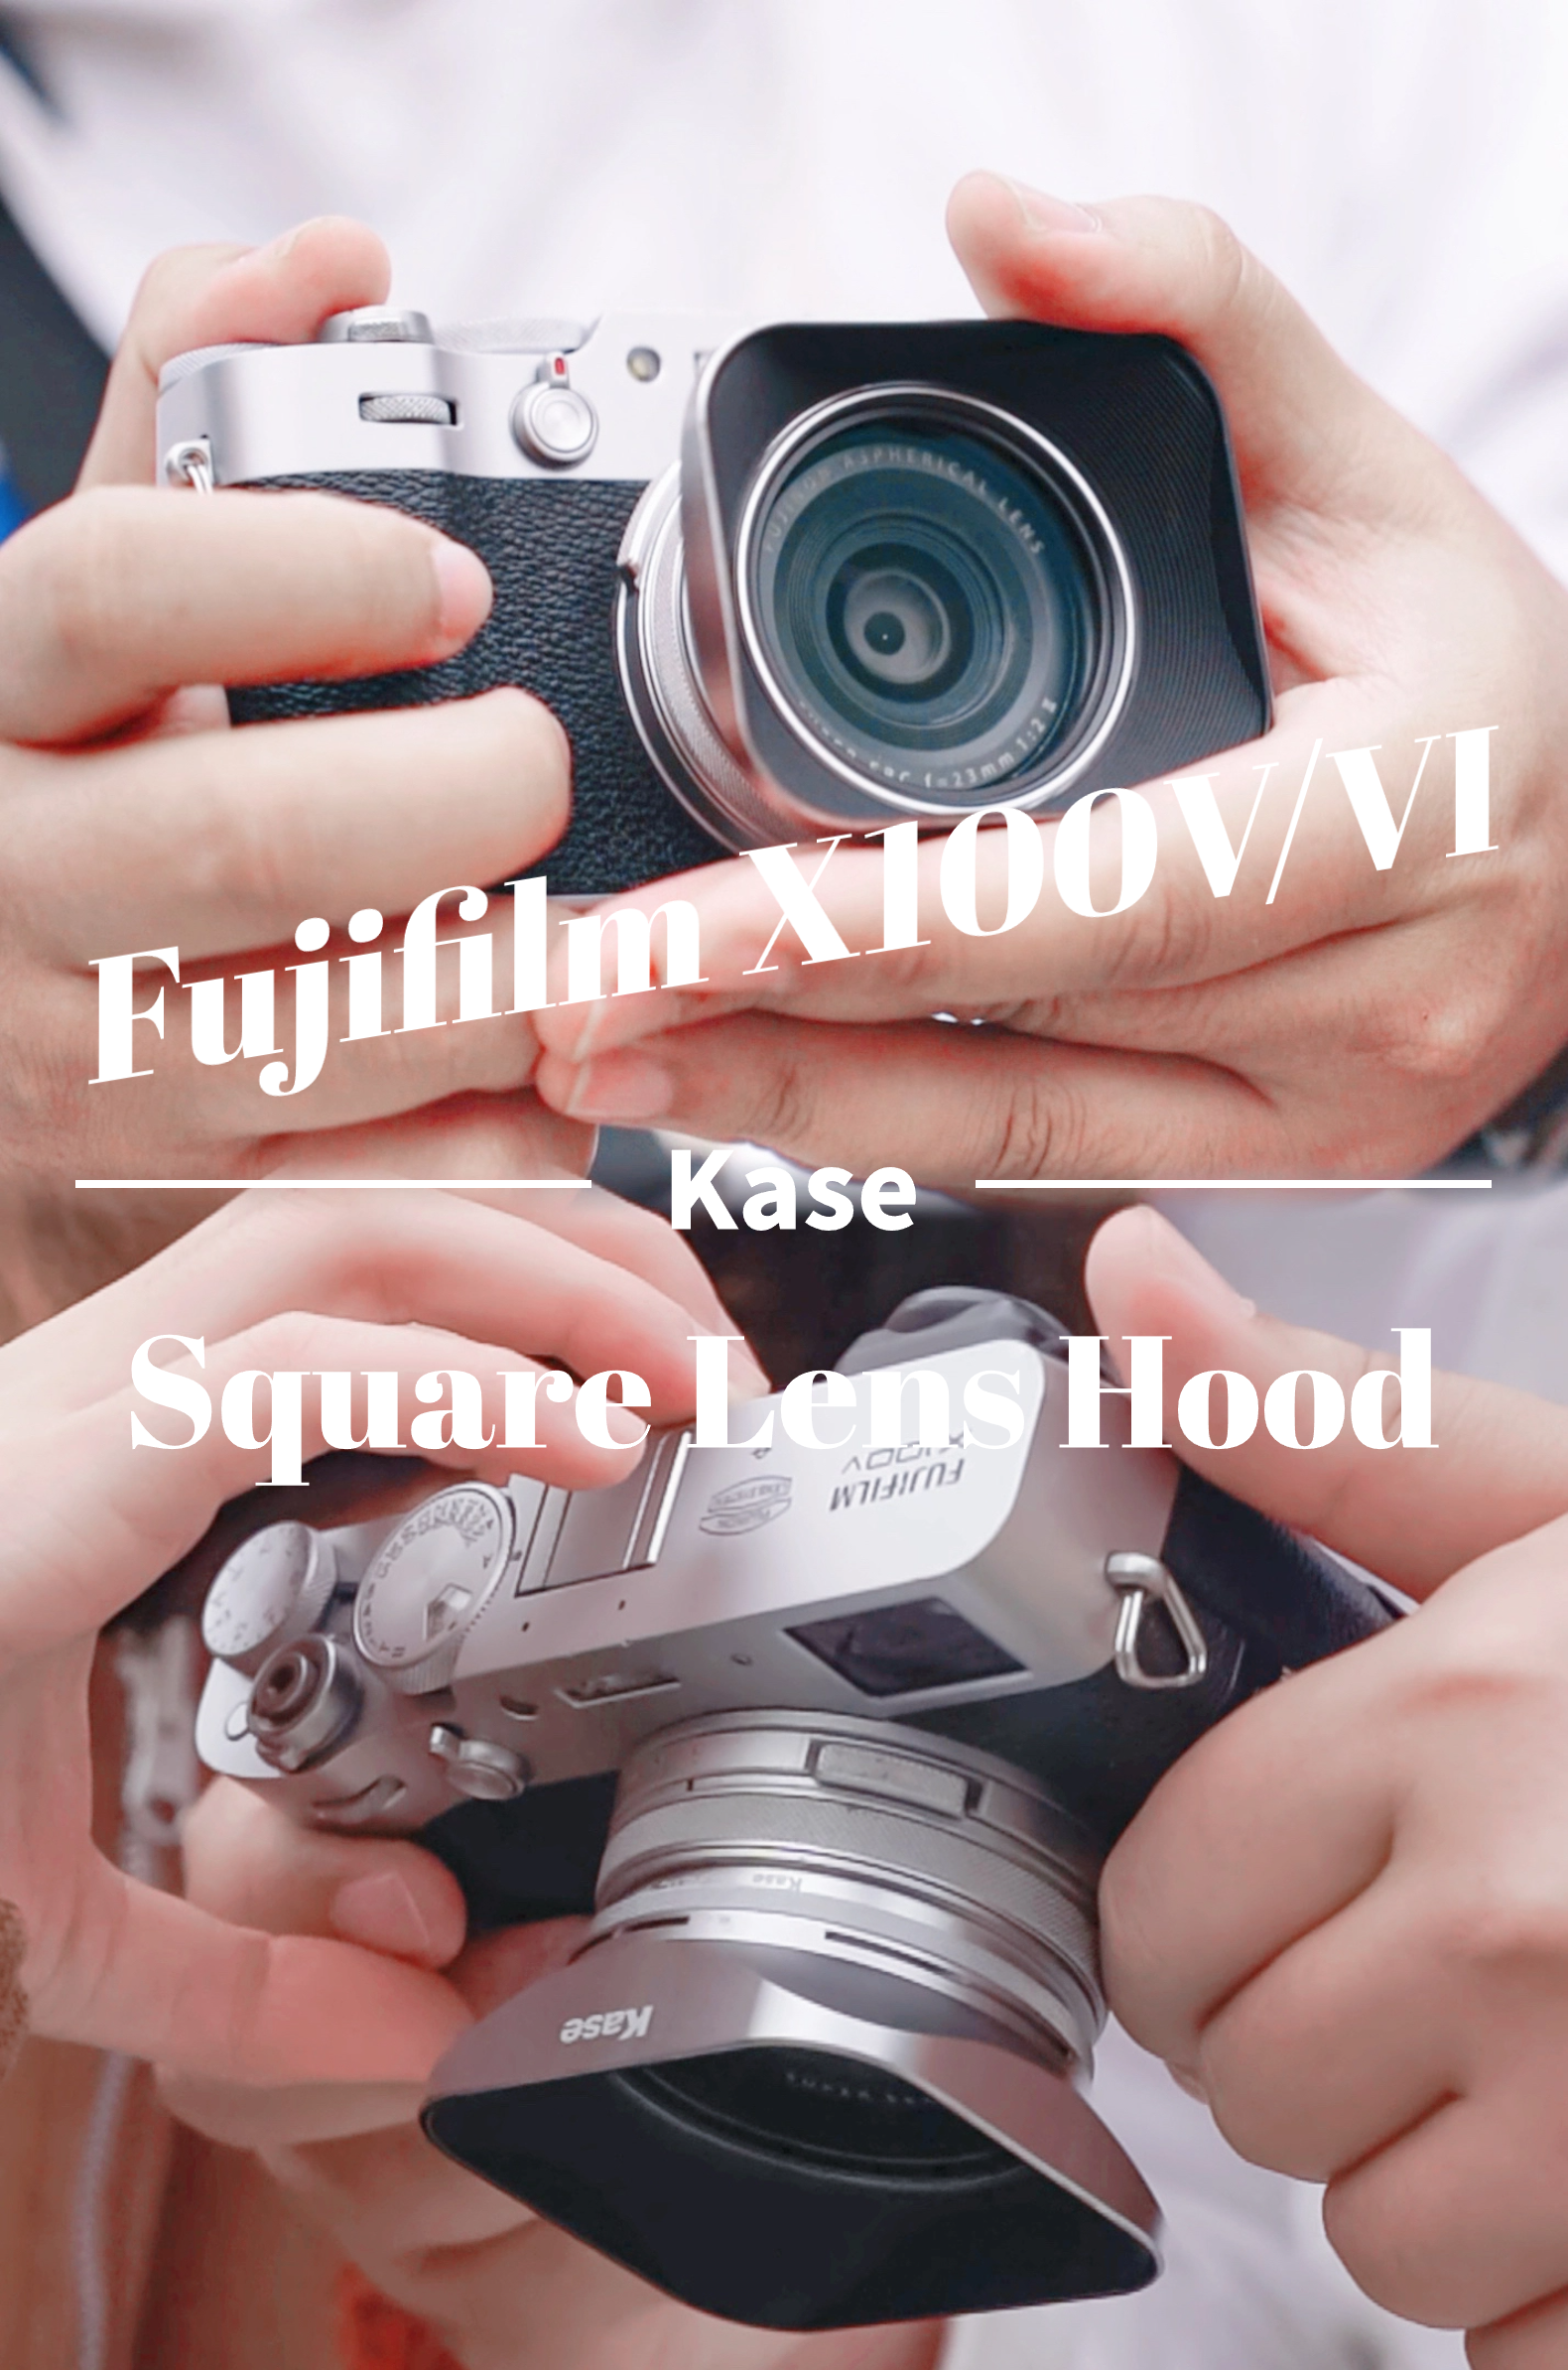 Kase Fujifilm X100V/VI Lens Hood